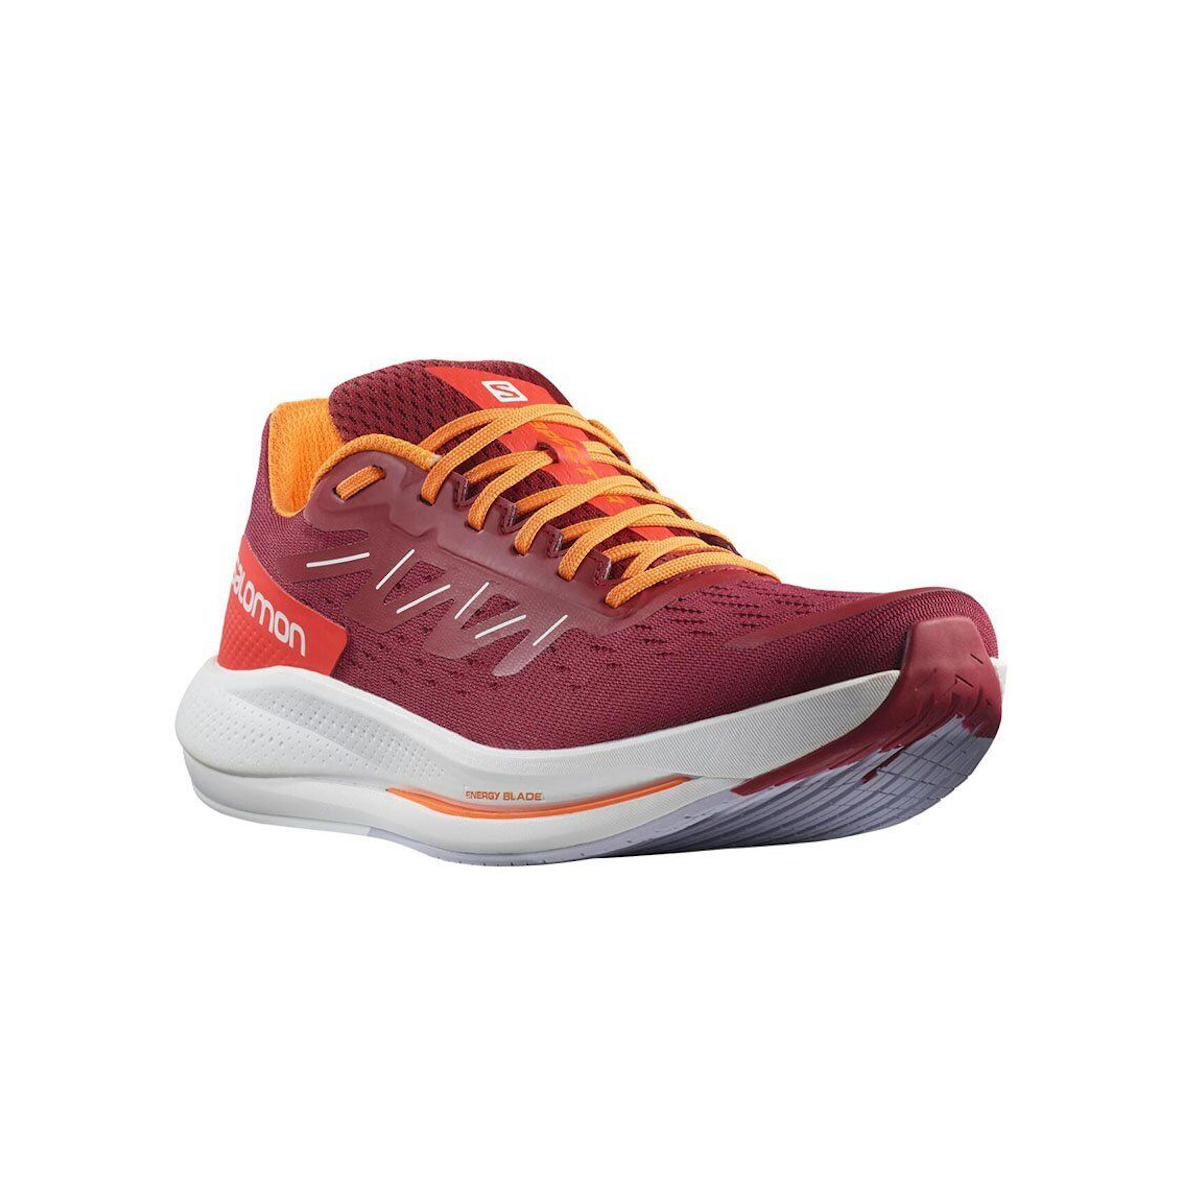 SALOMON SPECTUR trail running shoes - red/orange/violet